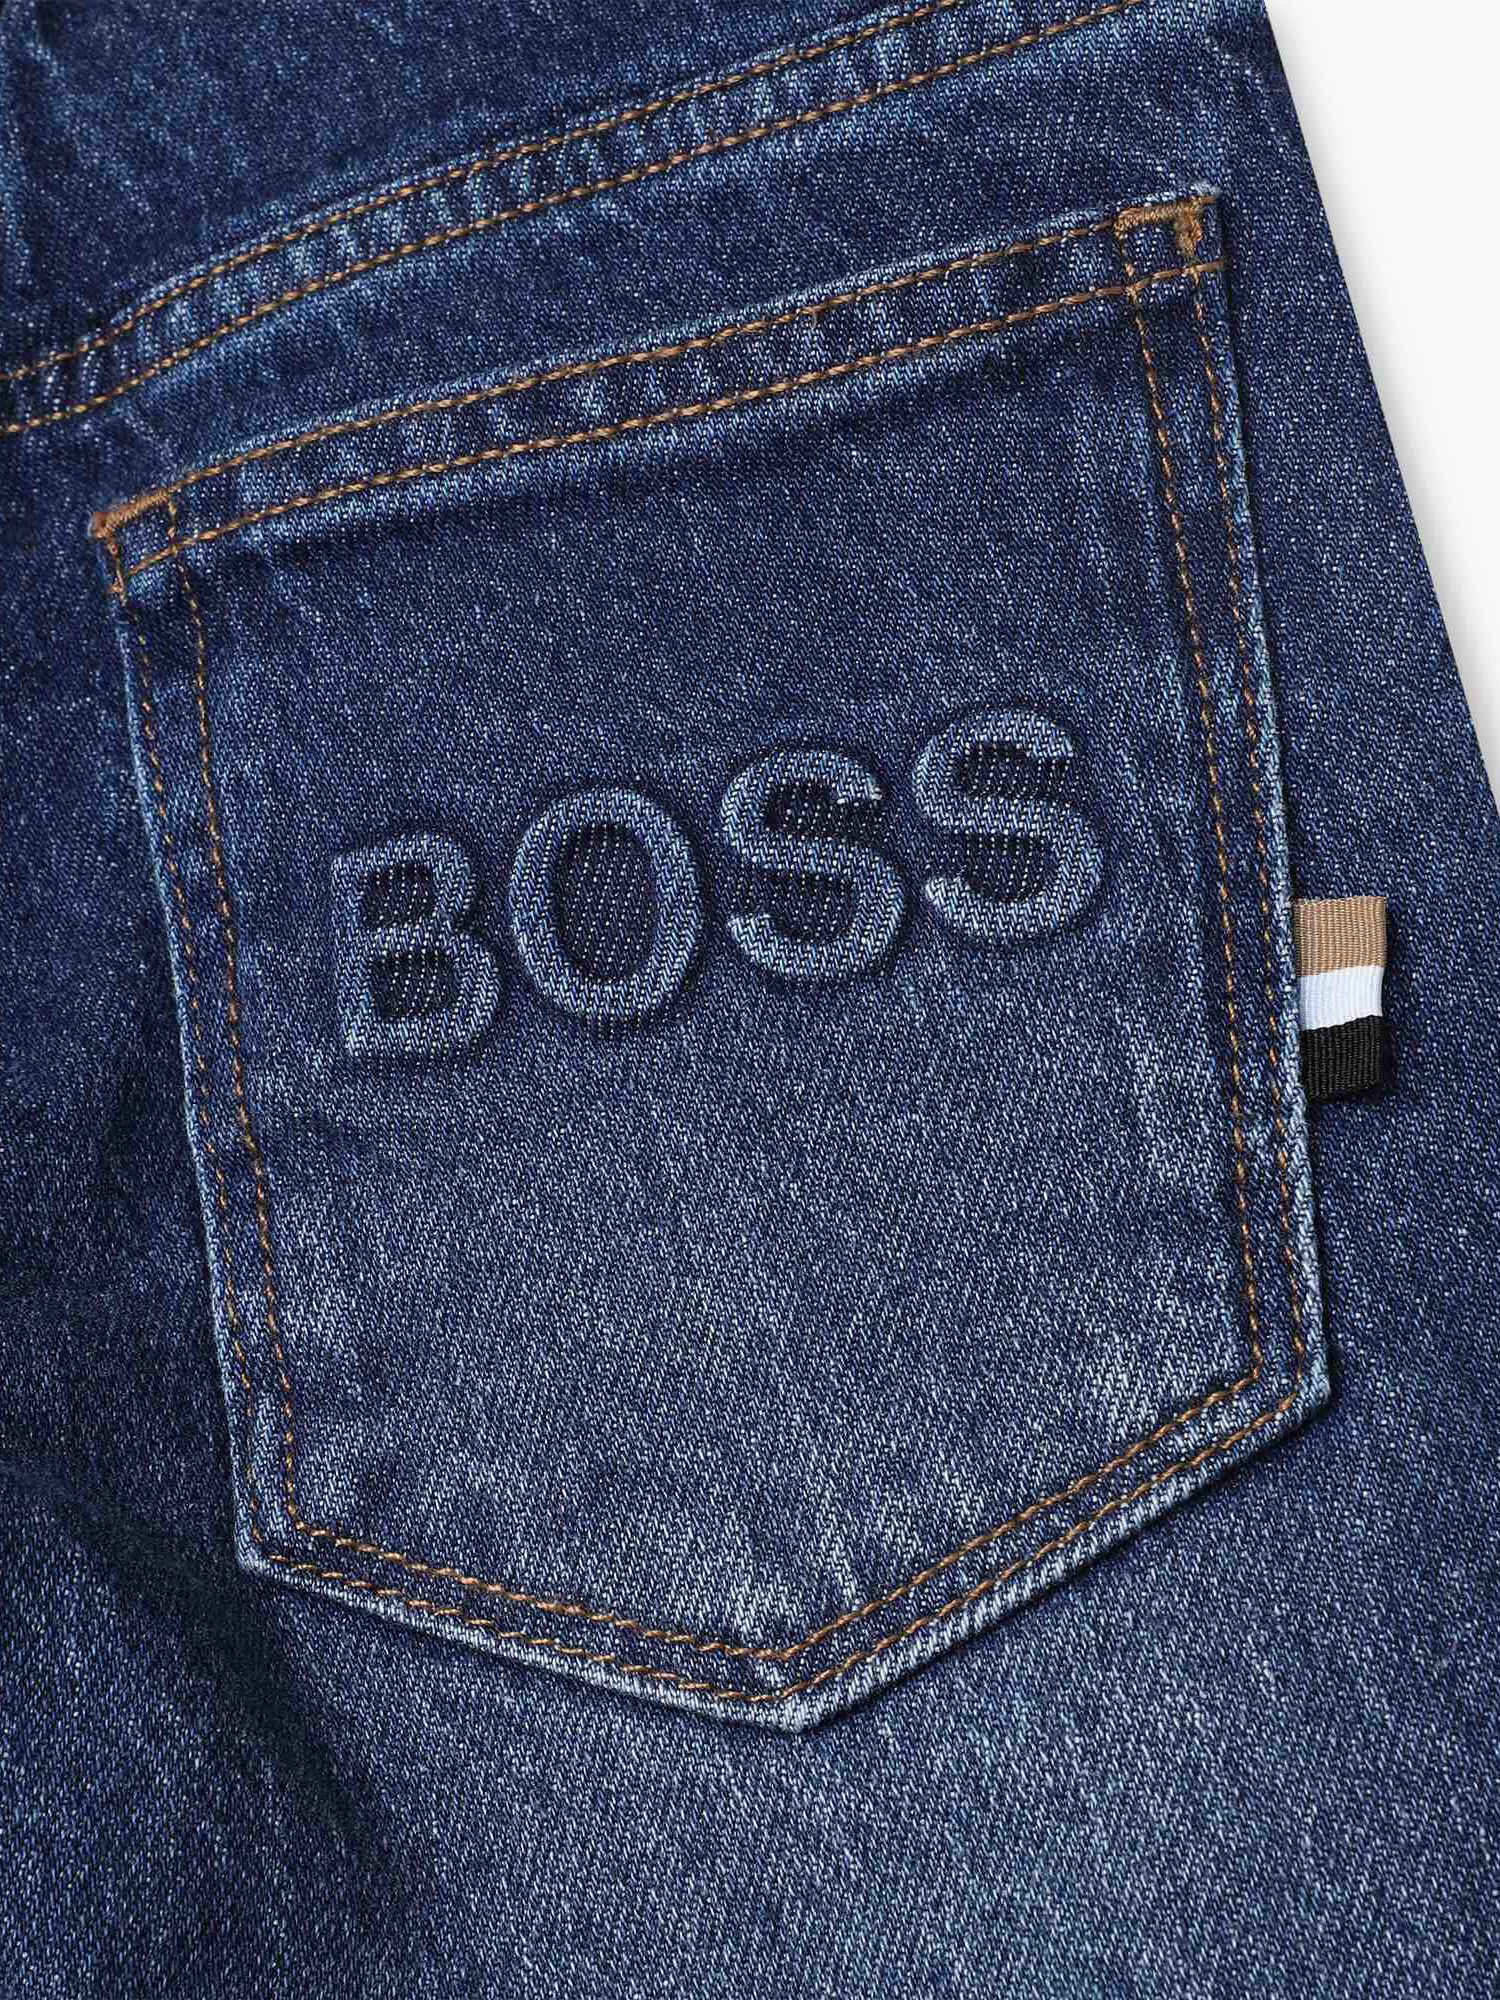 BOSS Boy's Logo Embossed Pocket Jeans, Blue, 5 years